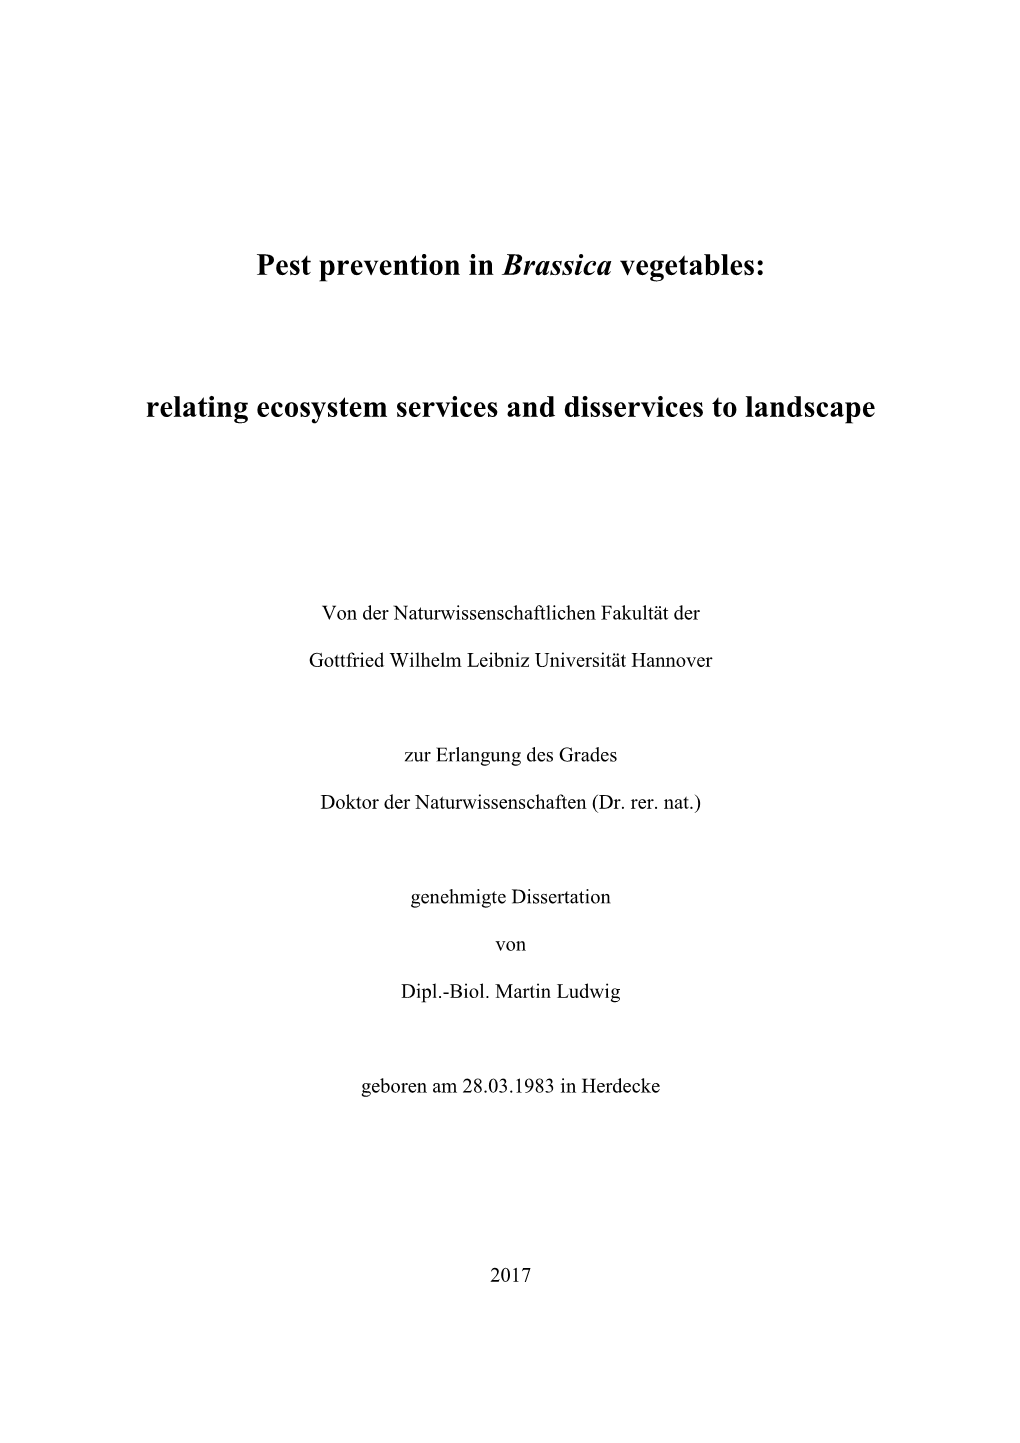 Pest Prevention in Brassica Vegetables